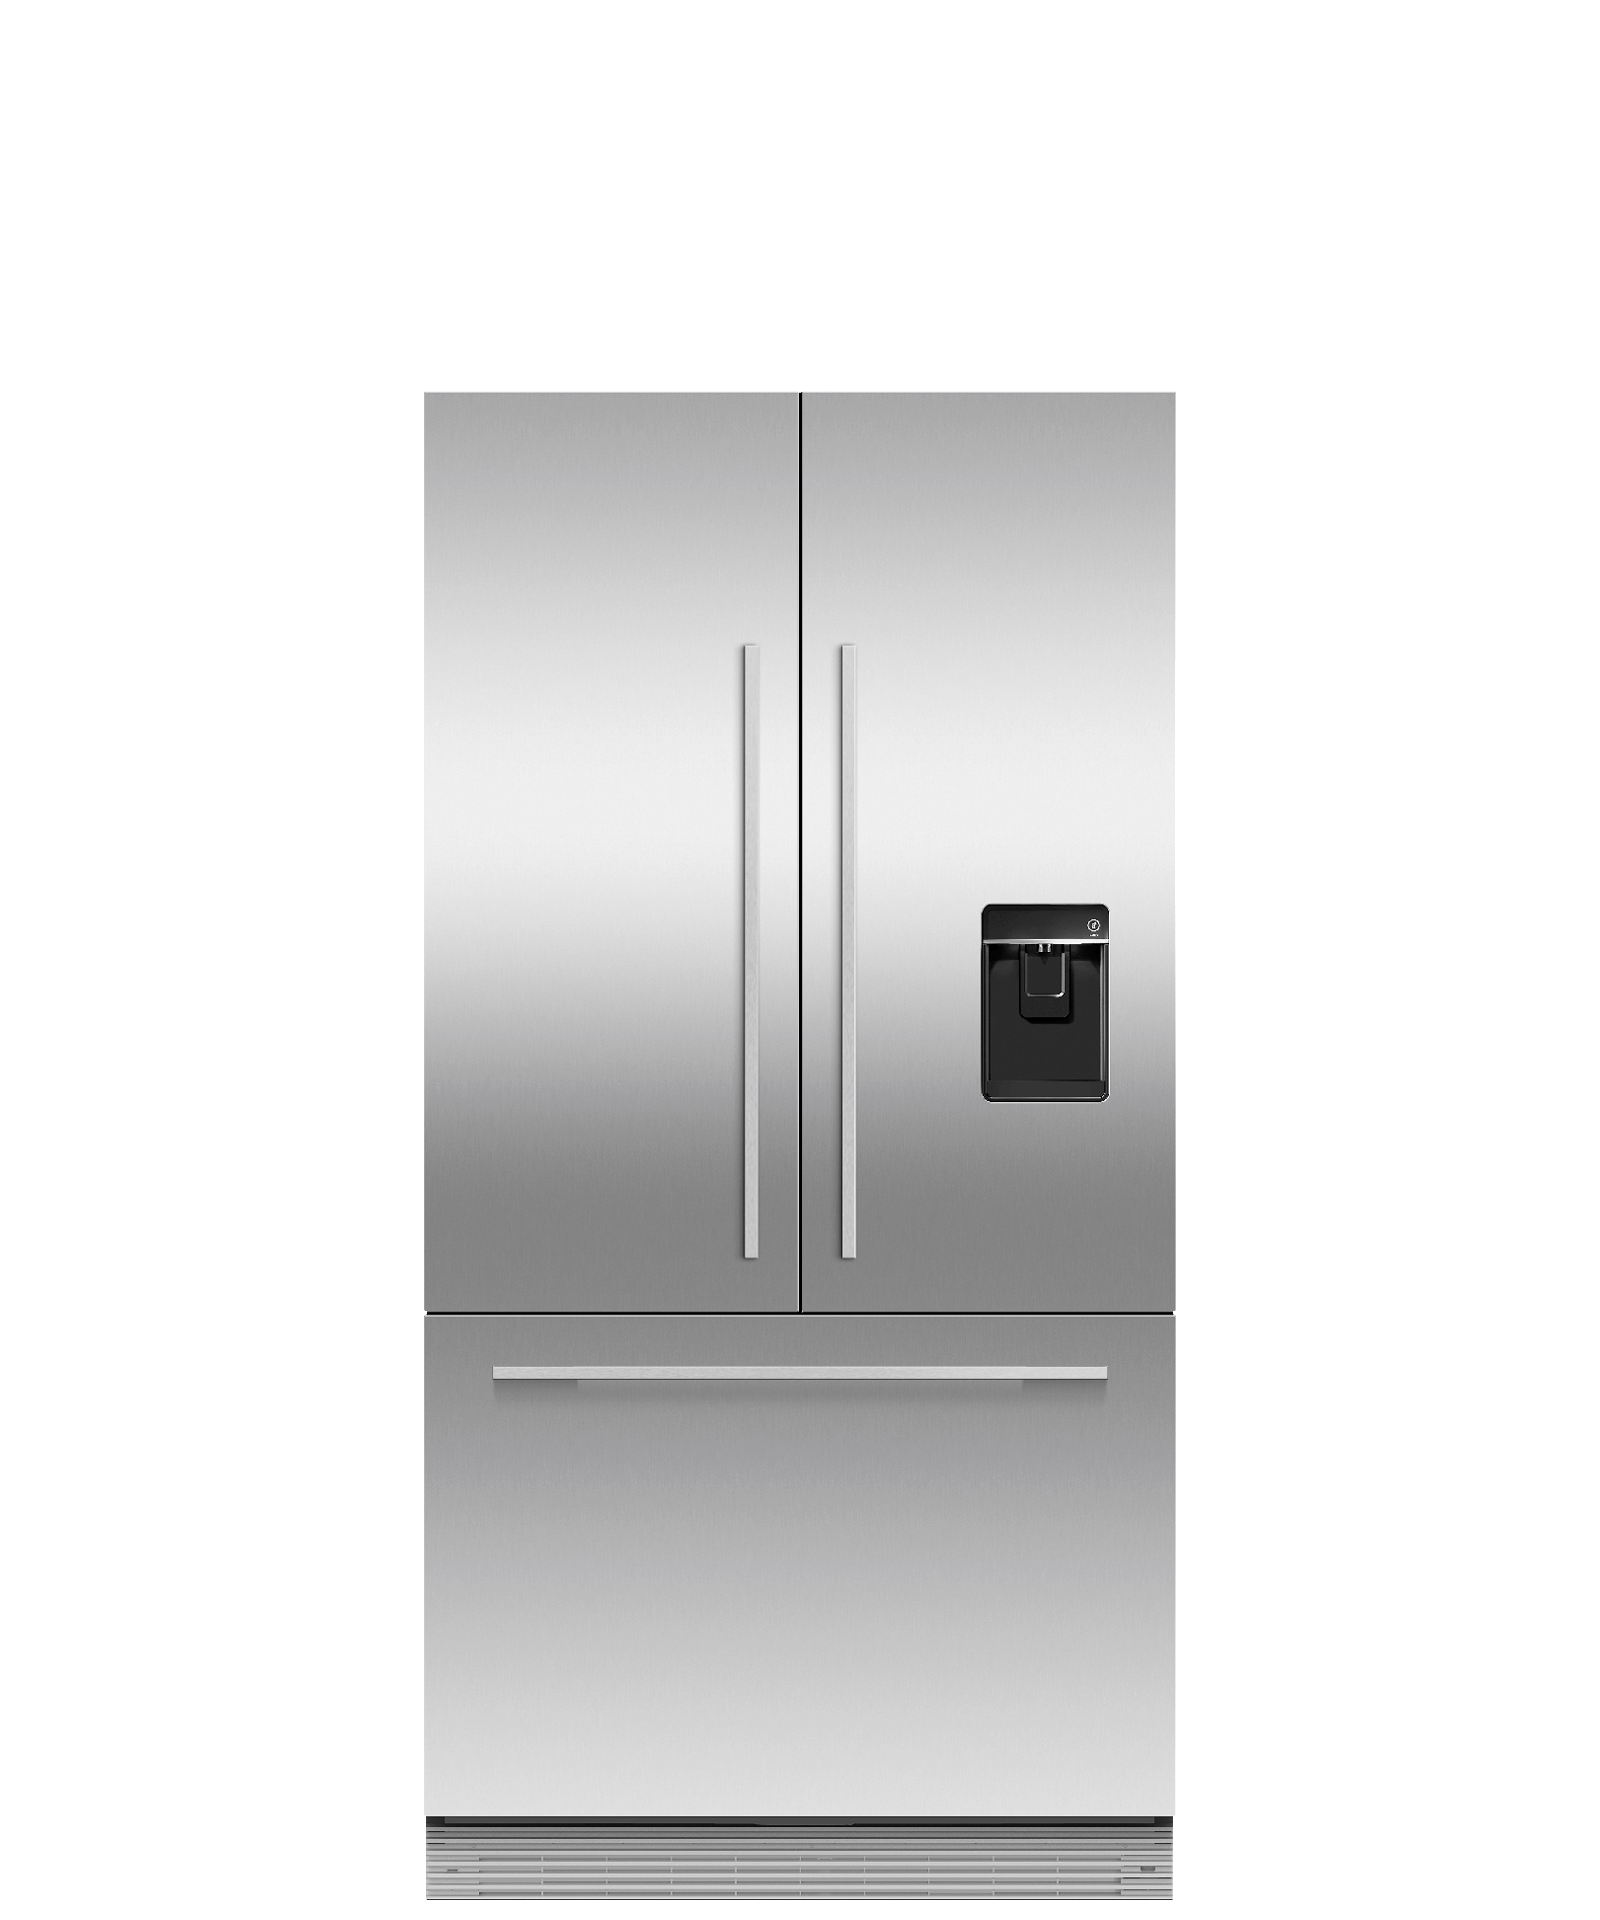 Integrated French Door Refrigerator Freezer, 90cm, Ice & Water